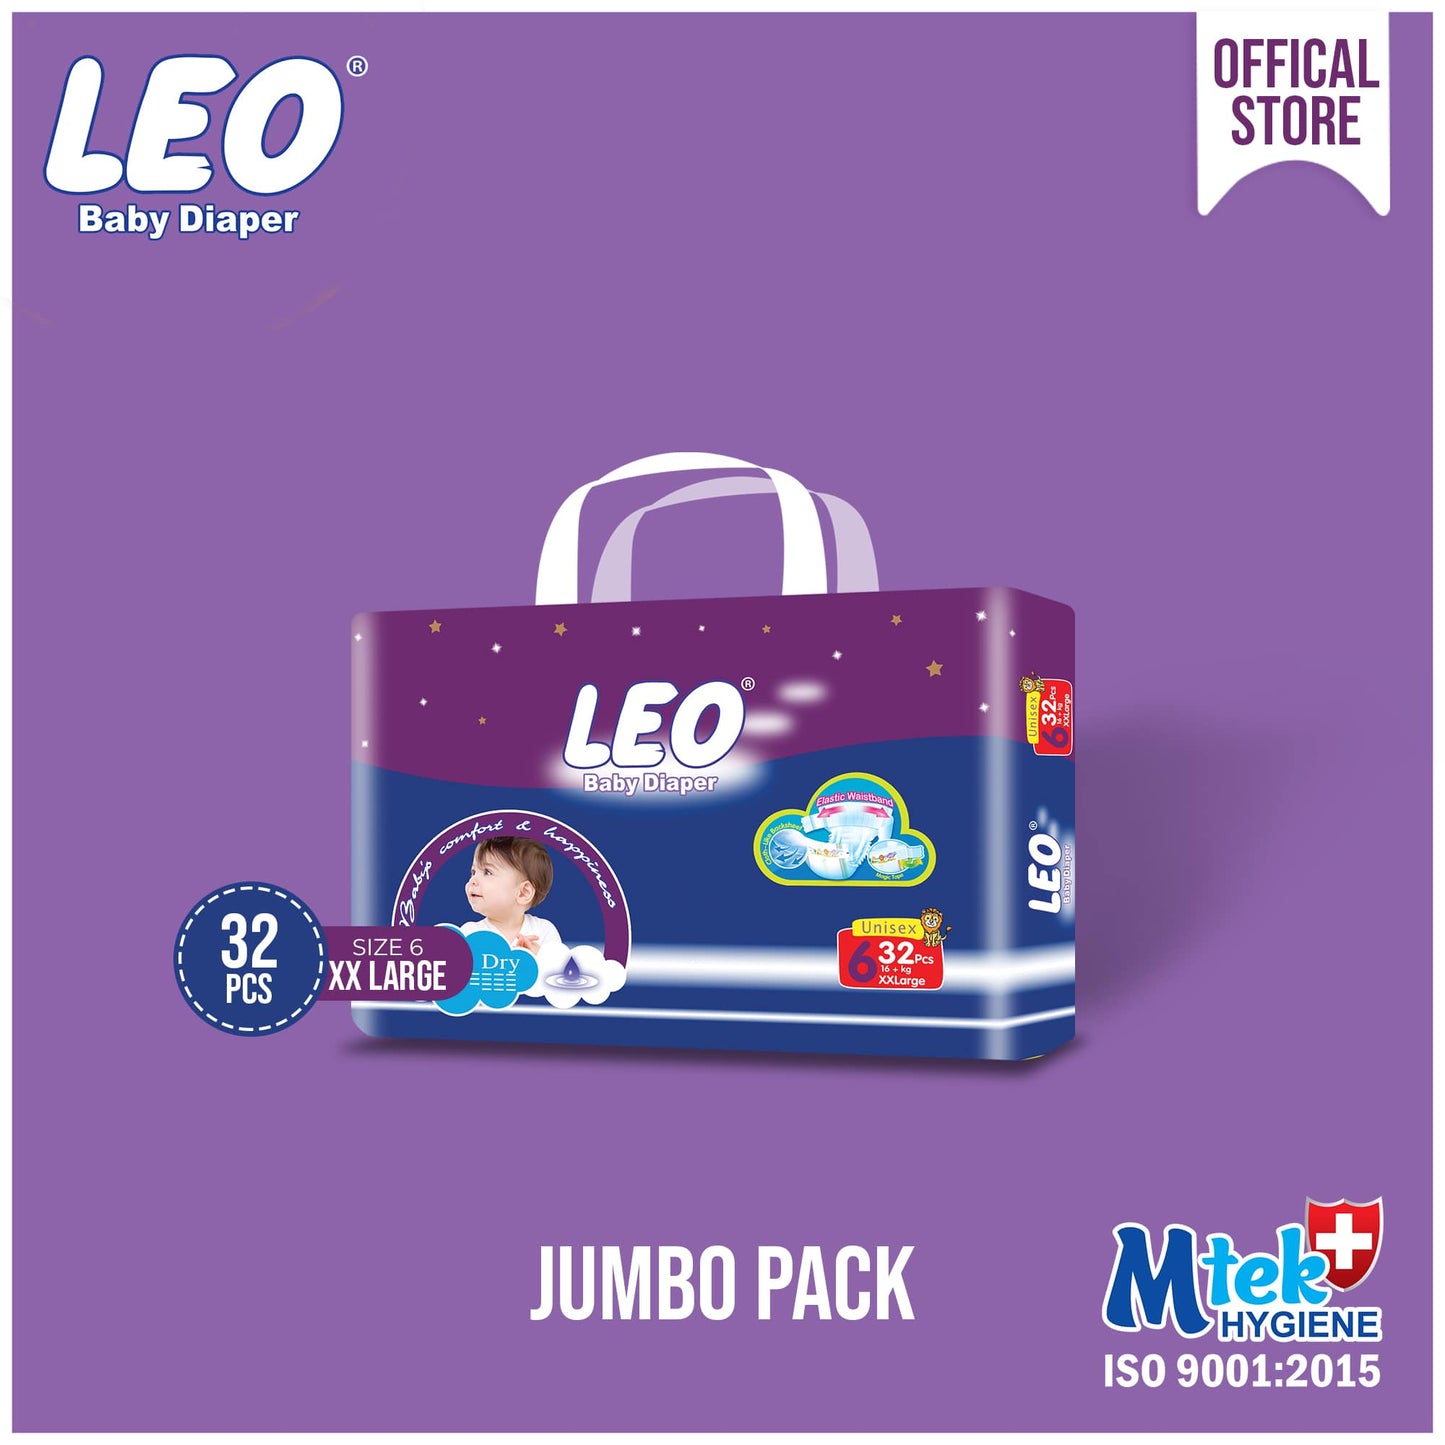 Leo Jumbo Pack Baby Diaper – Size 6, XX-Large – 32 Pcs